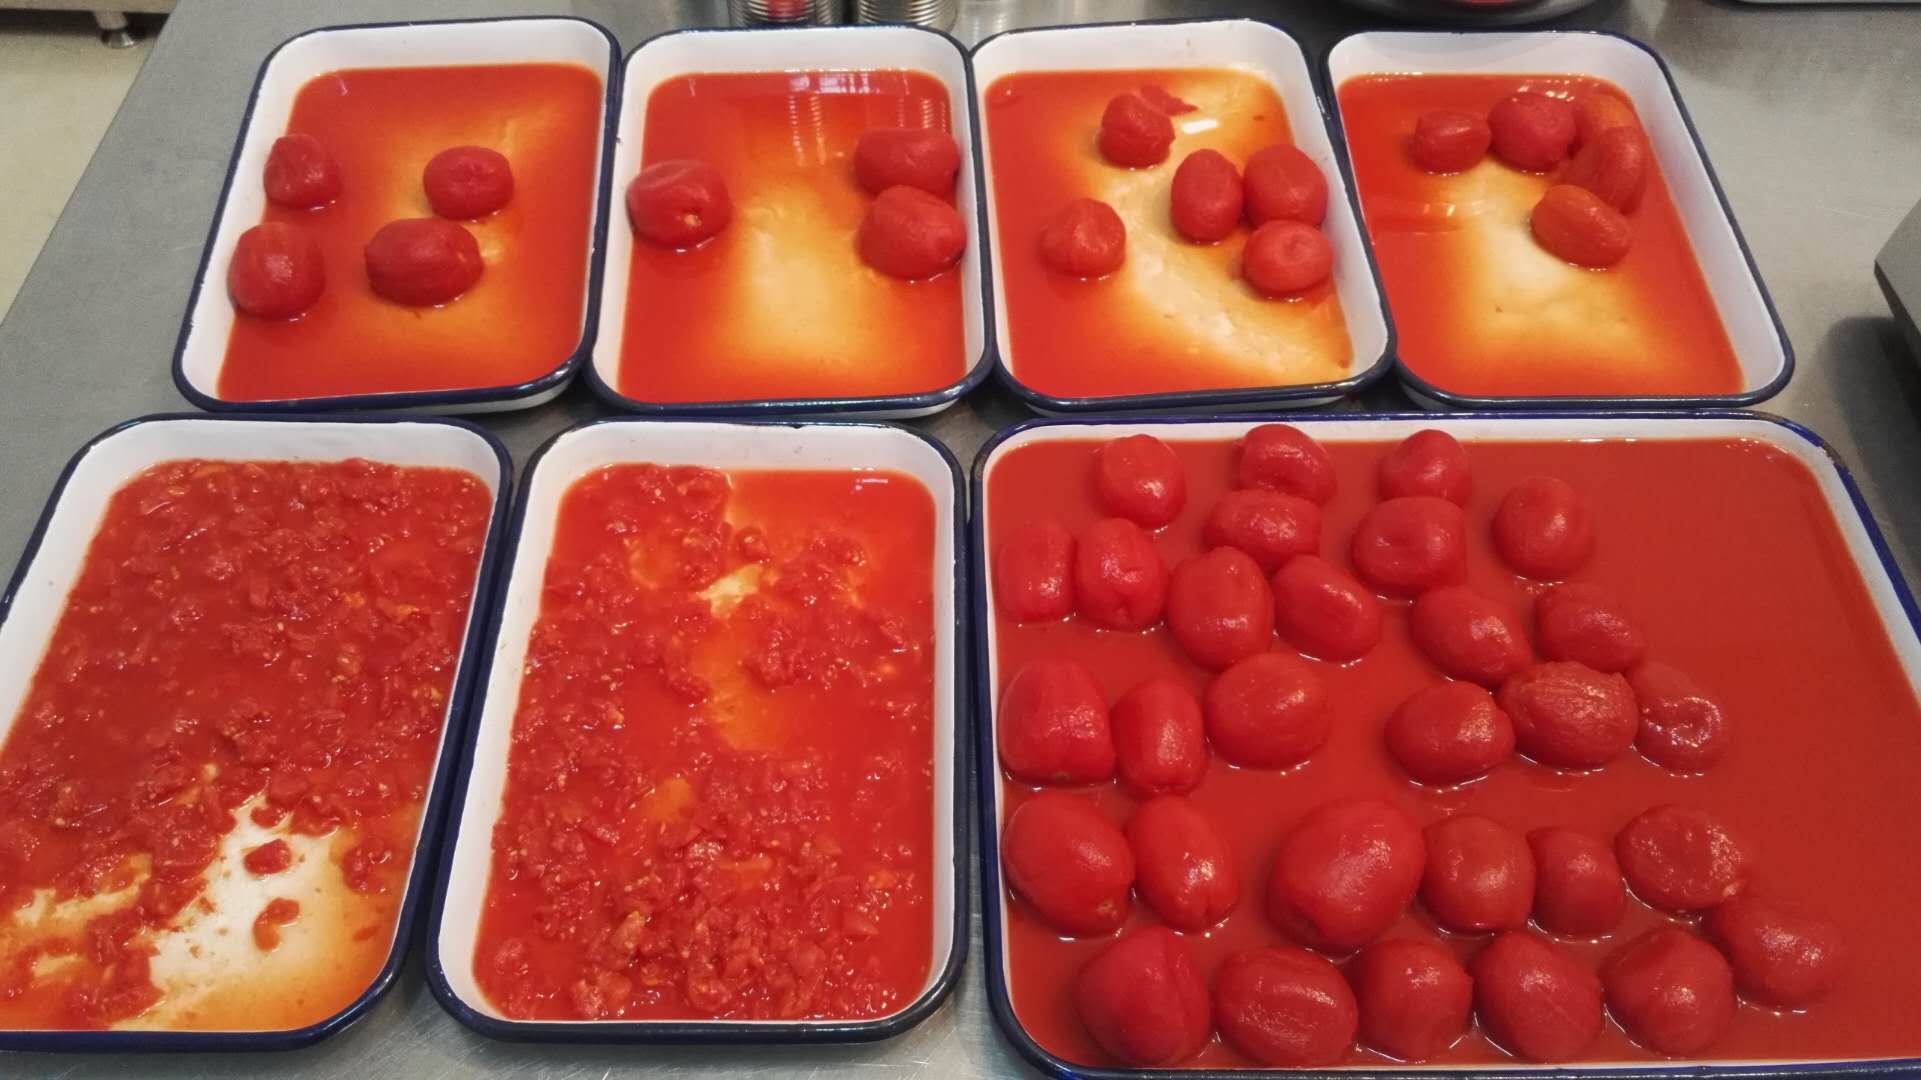 Teneke doğranmış domates 400g,800g,2500g,2850g